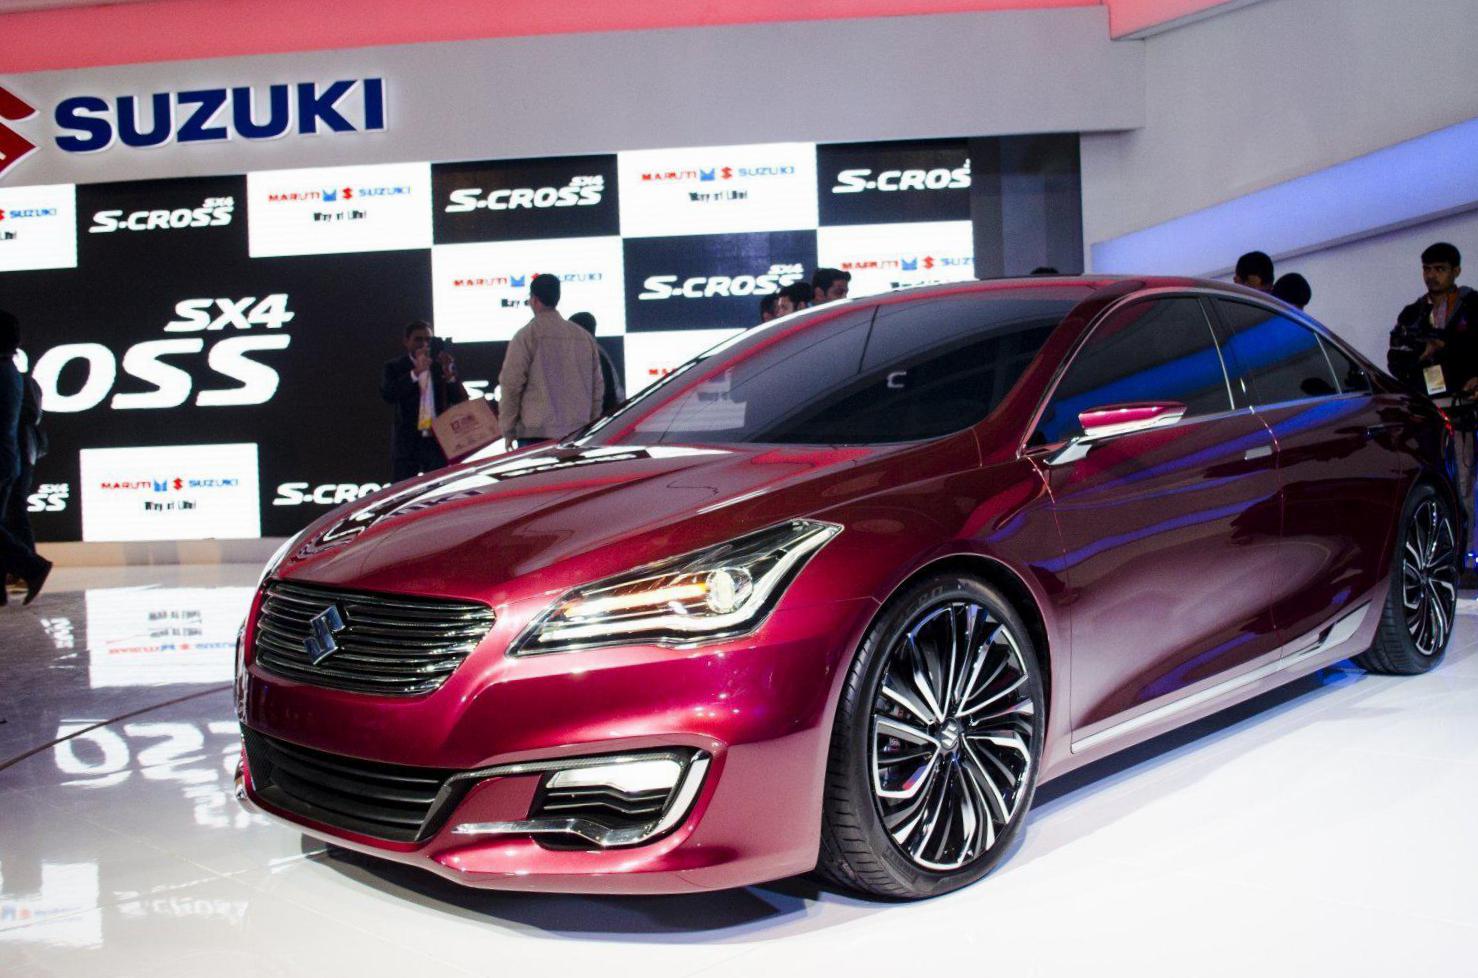 Suzuki Ciaz prices 2013